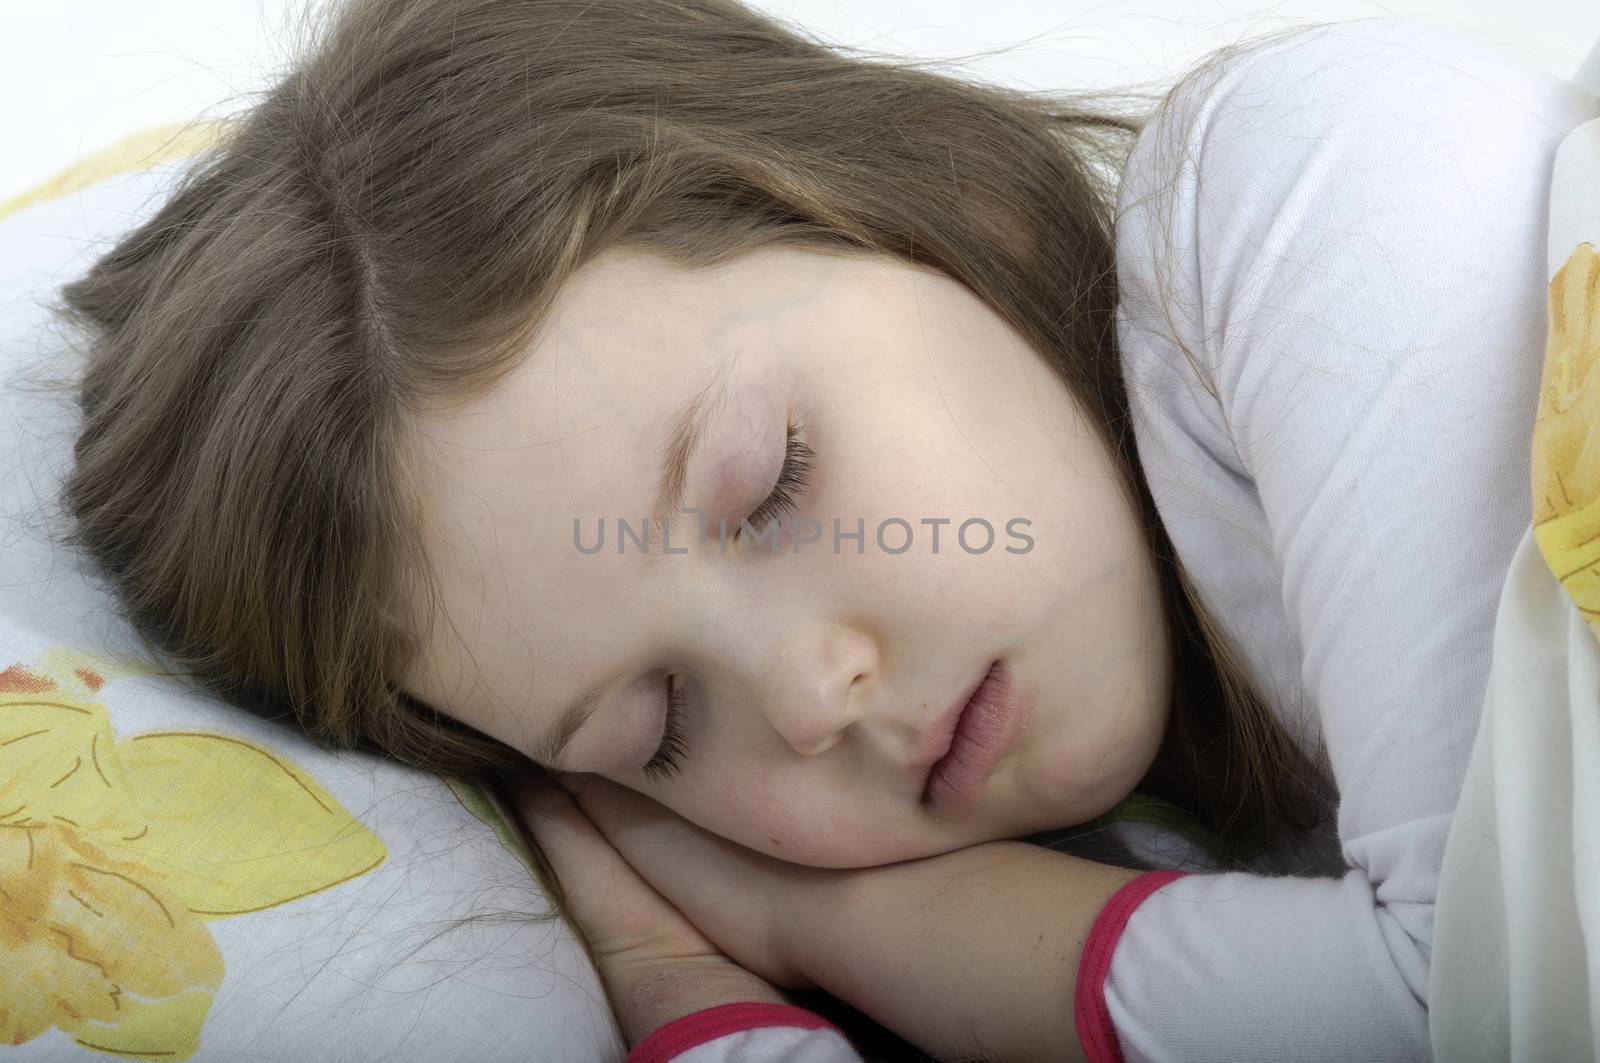 Little girl sleeping in bed by velkol